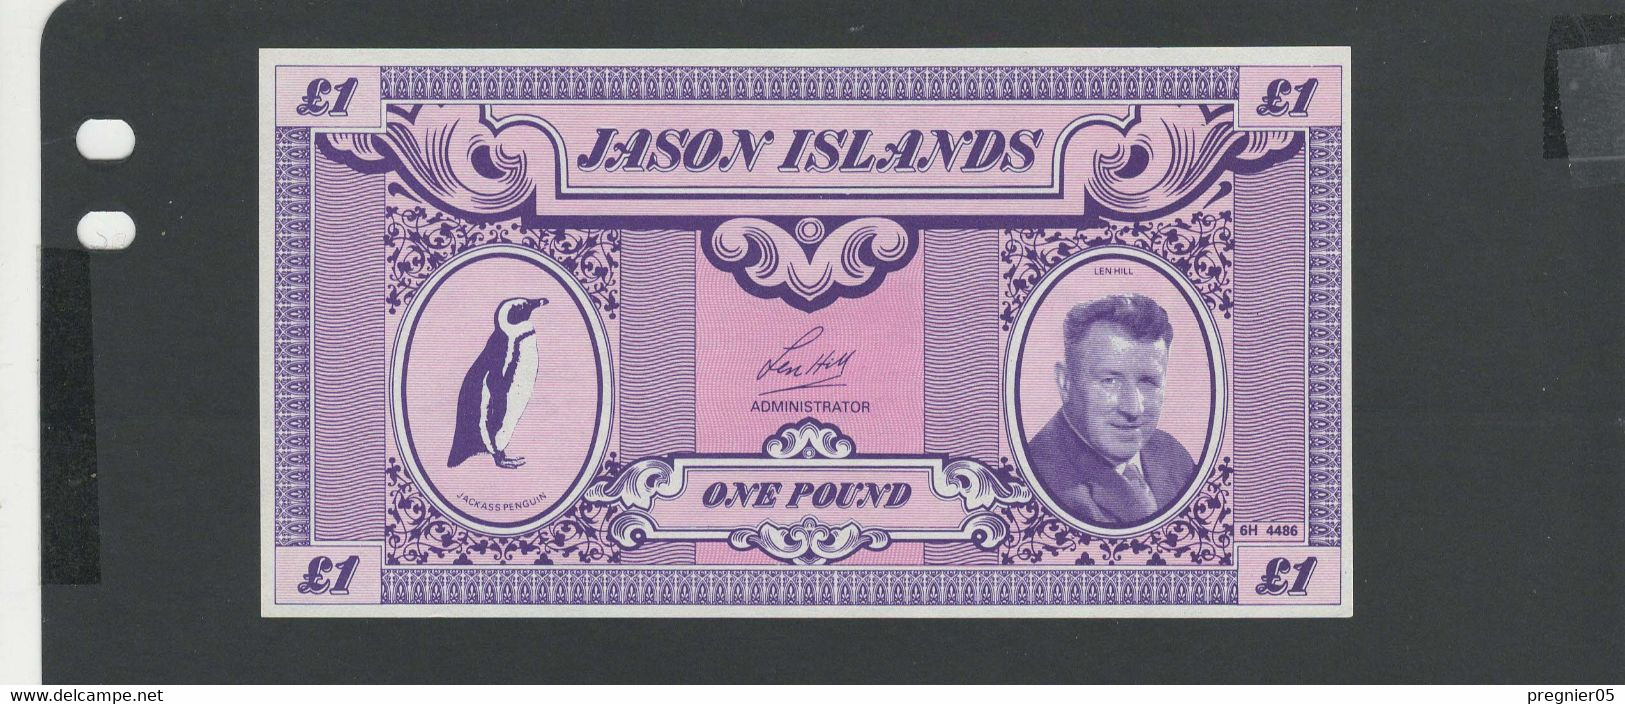 FALKLAND - JASON - Billet 1 Livre 1978 NEUF/UNC - Falkland Islands